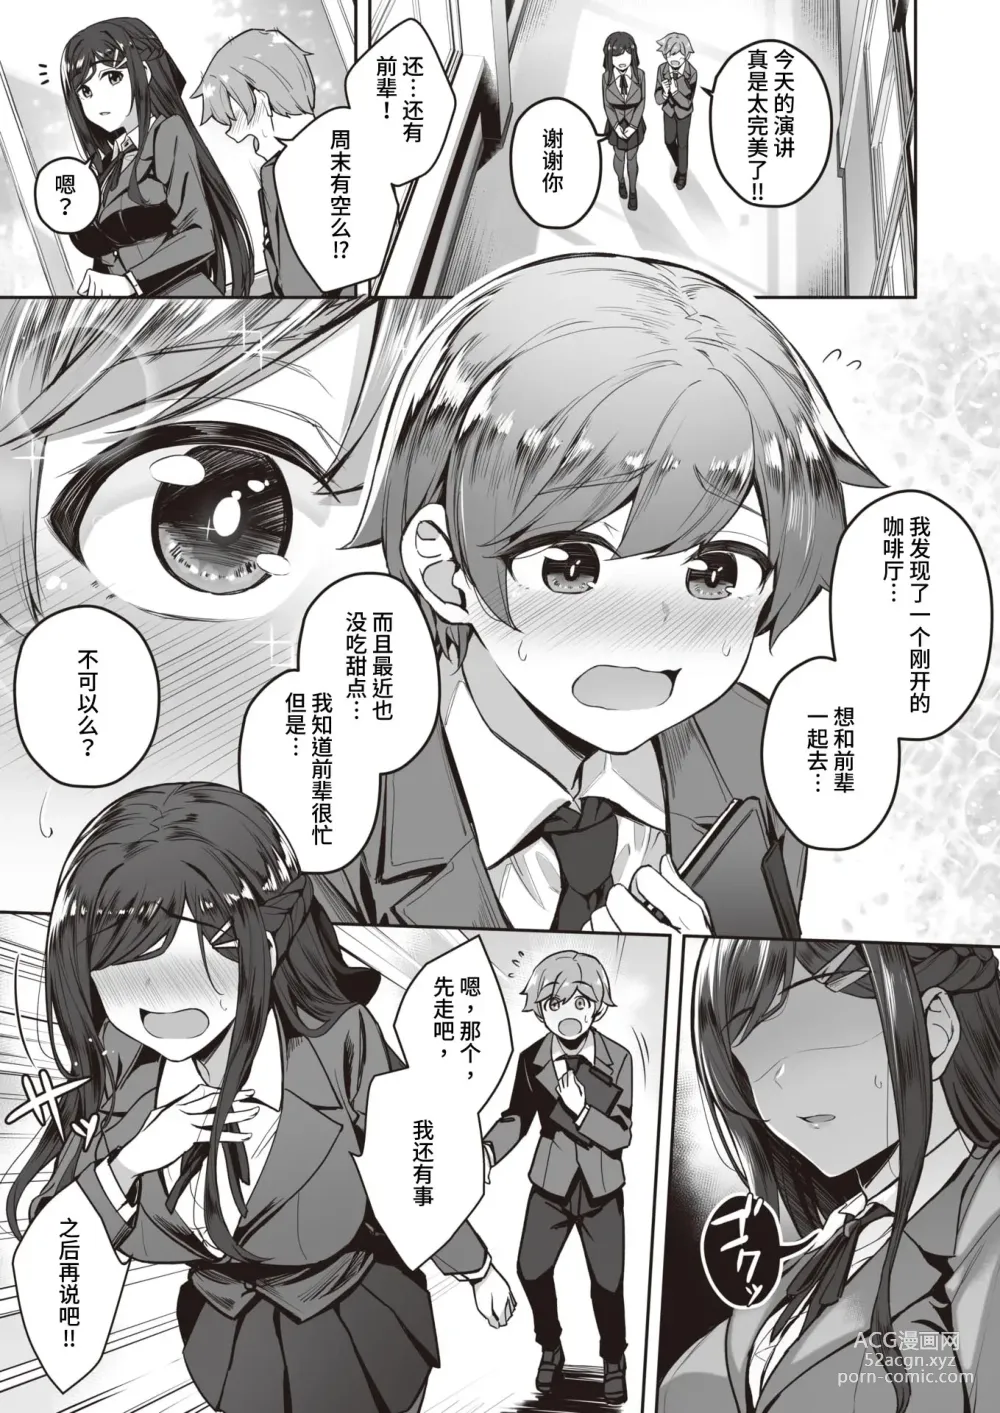 Page 3 of manga Close your eyes